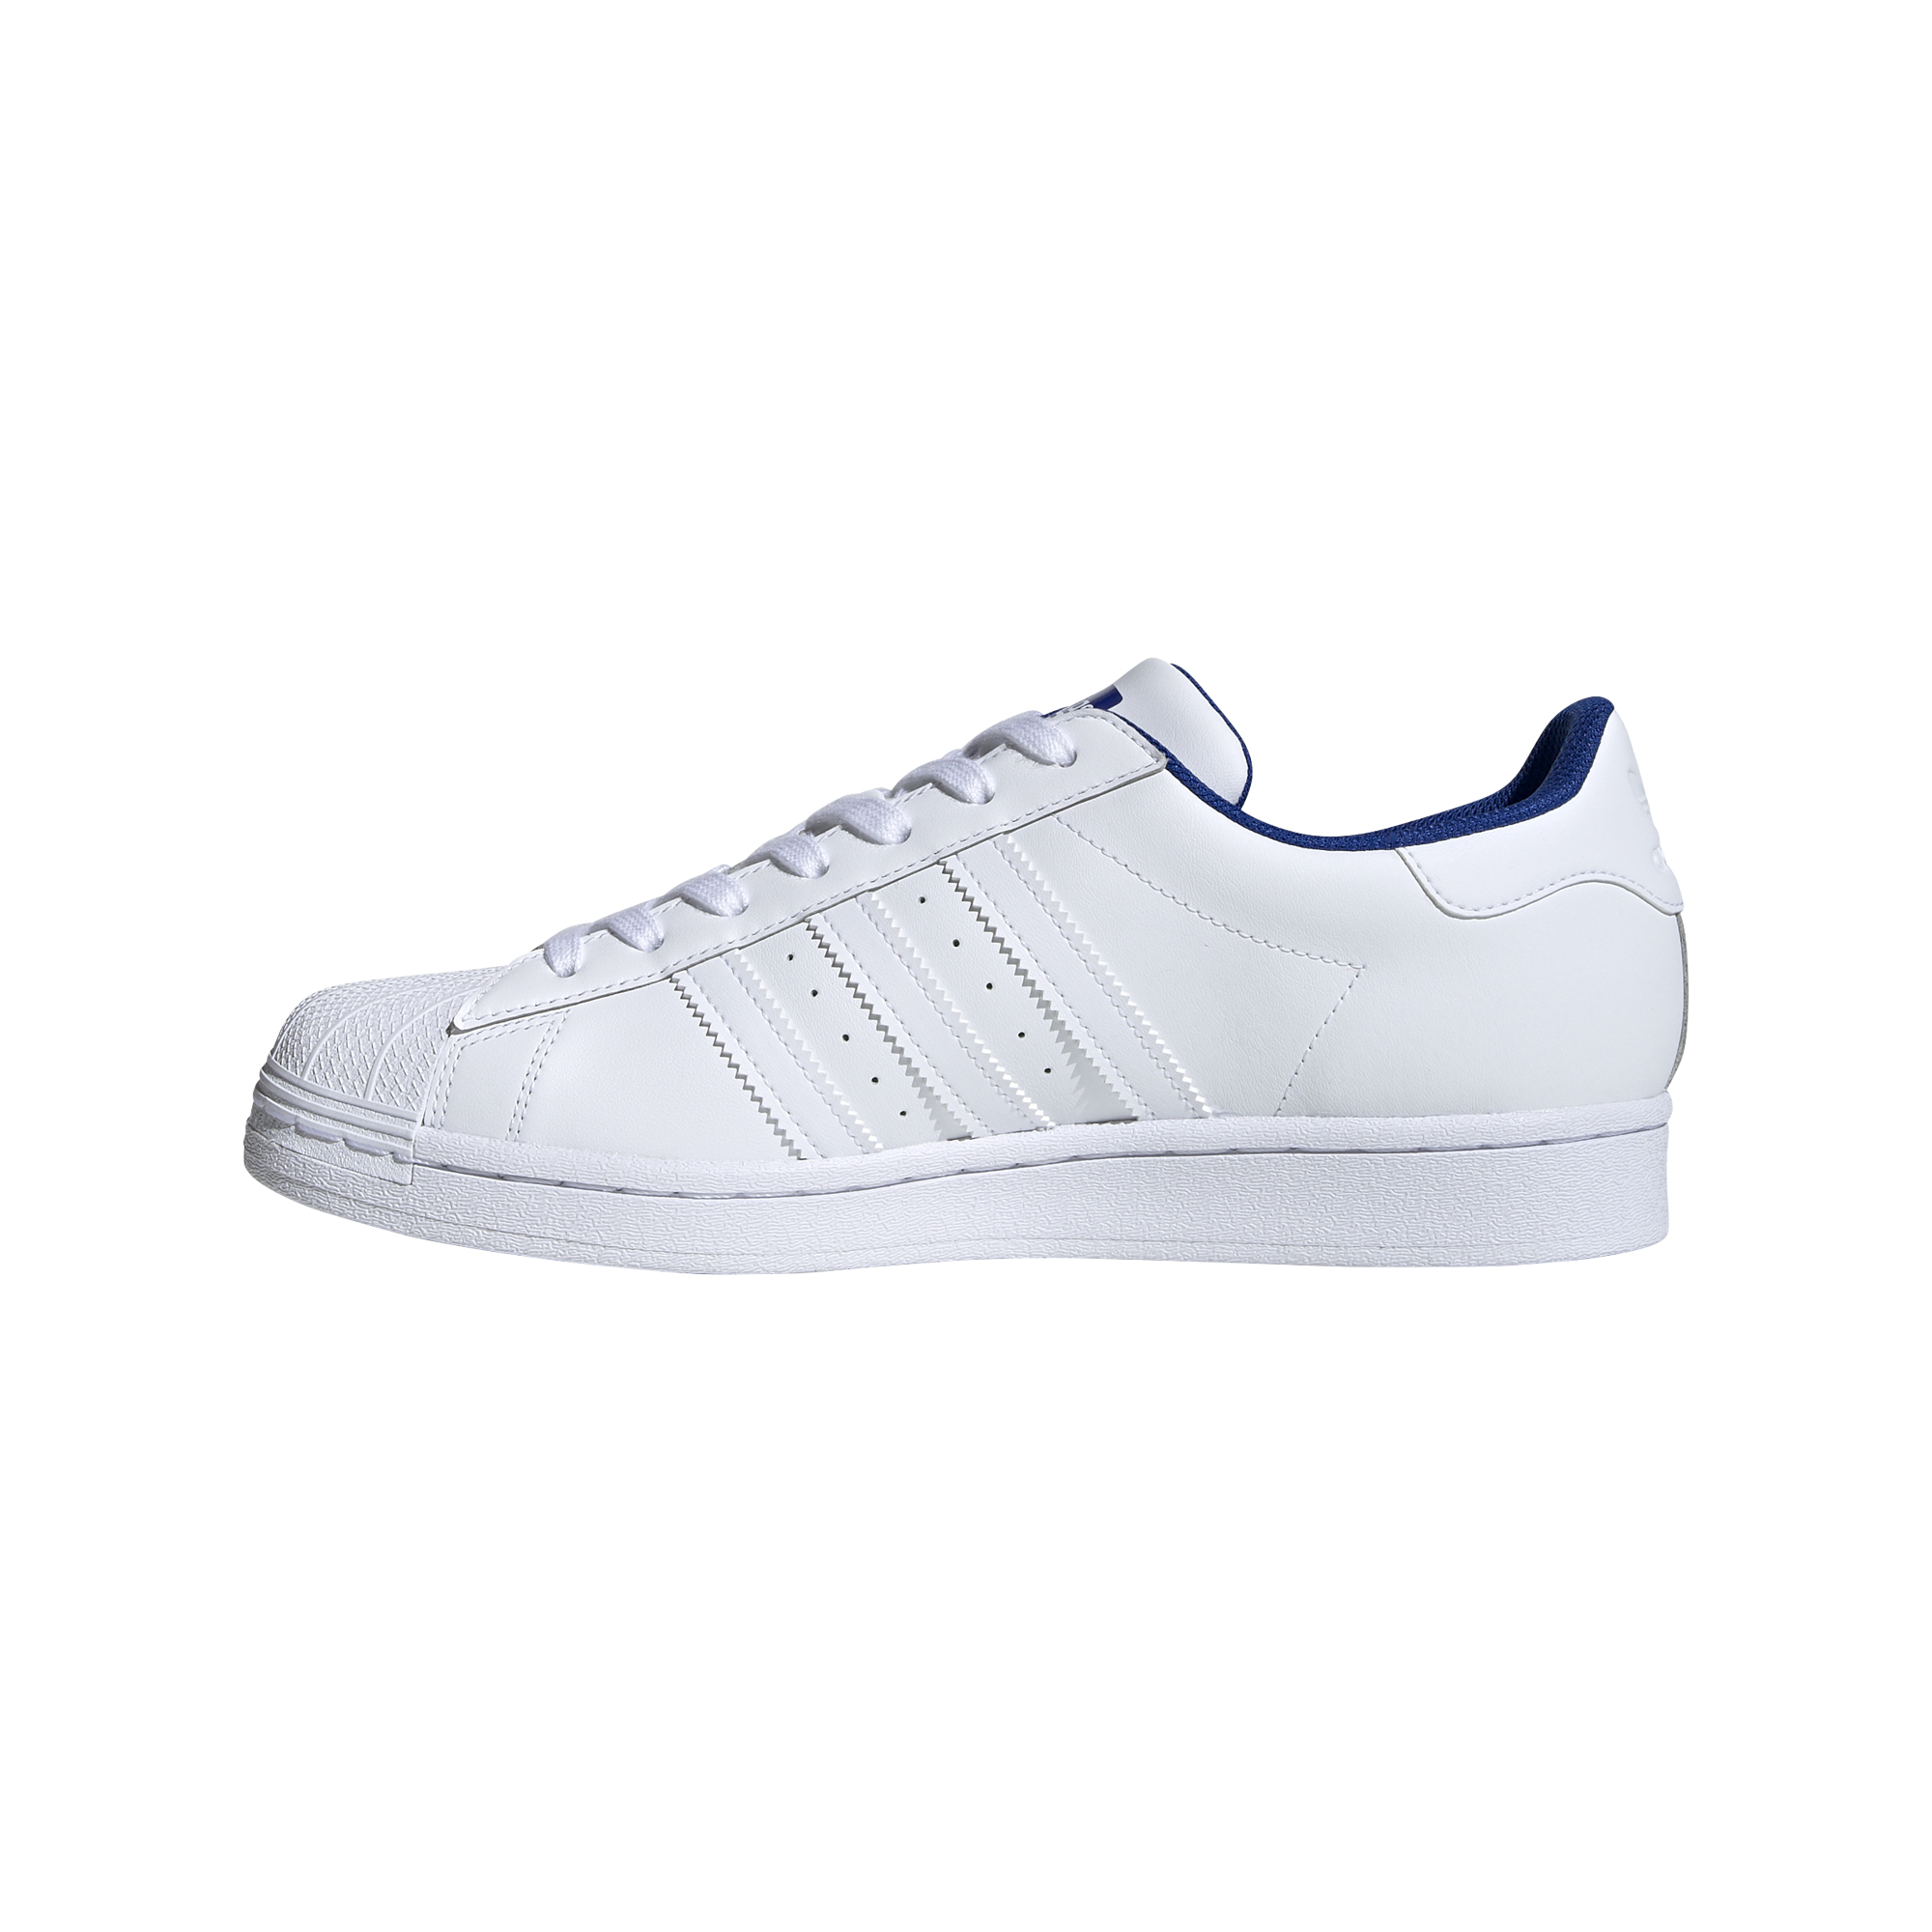 adidas Superstar Ftw White/ Ftw White/ Royal Blue 59515